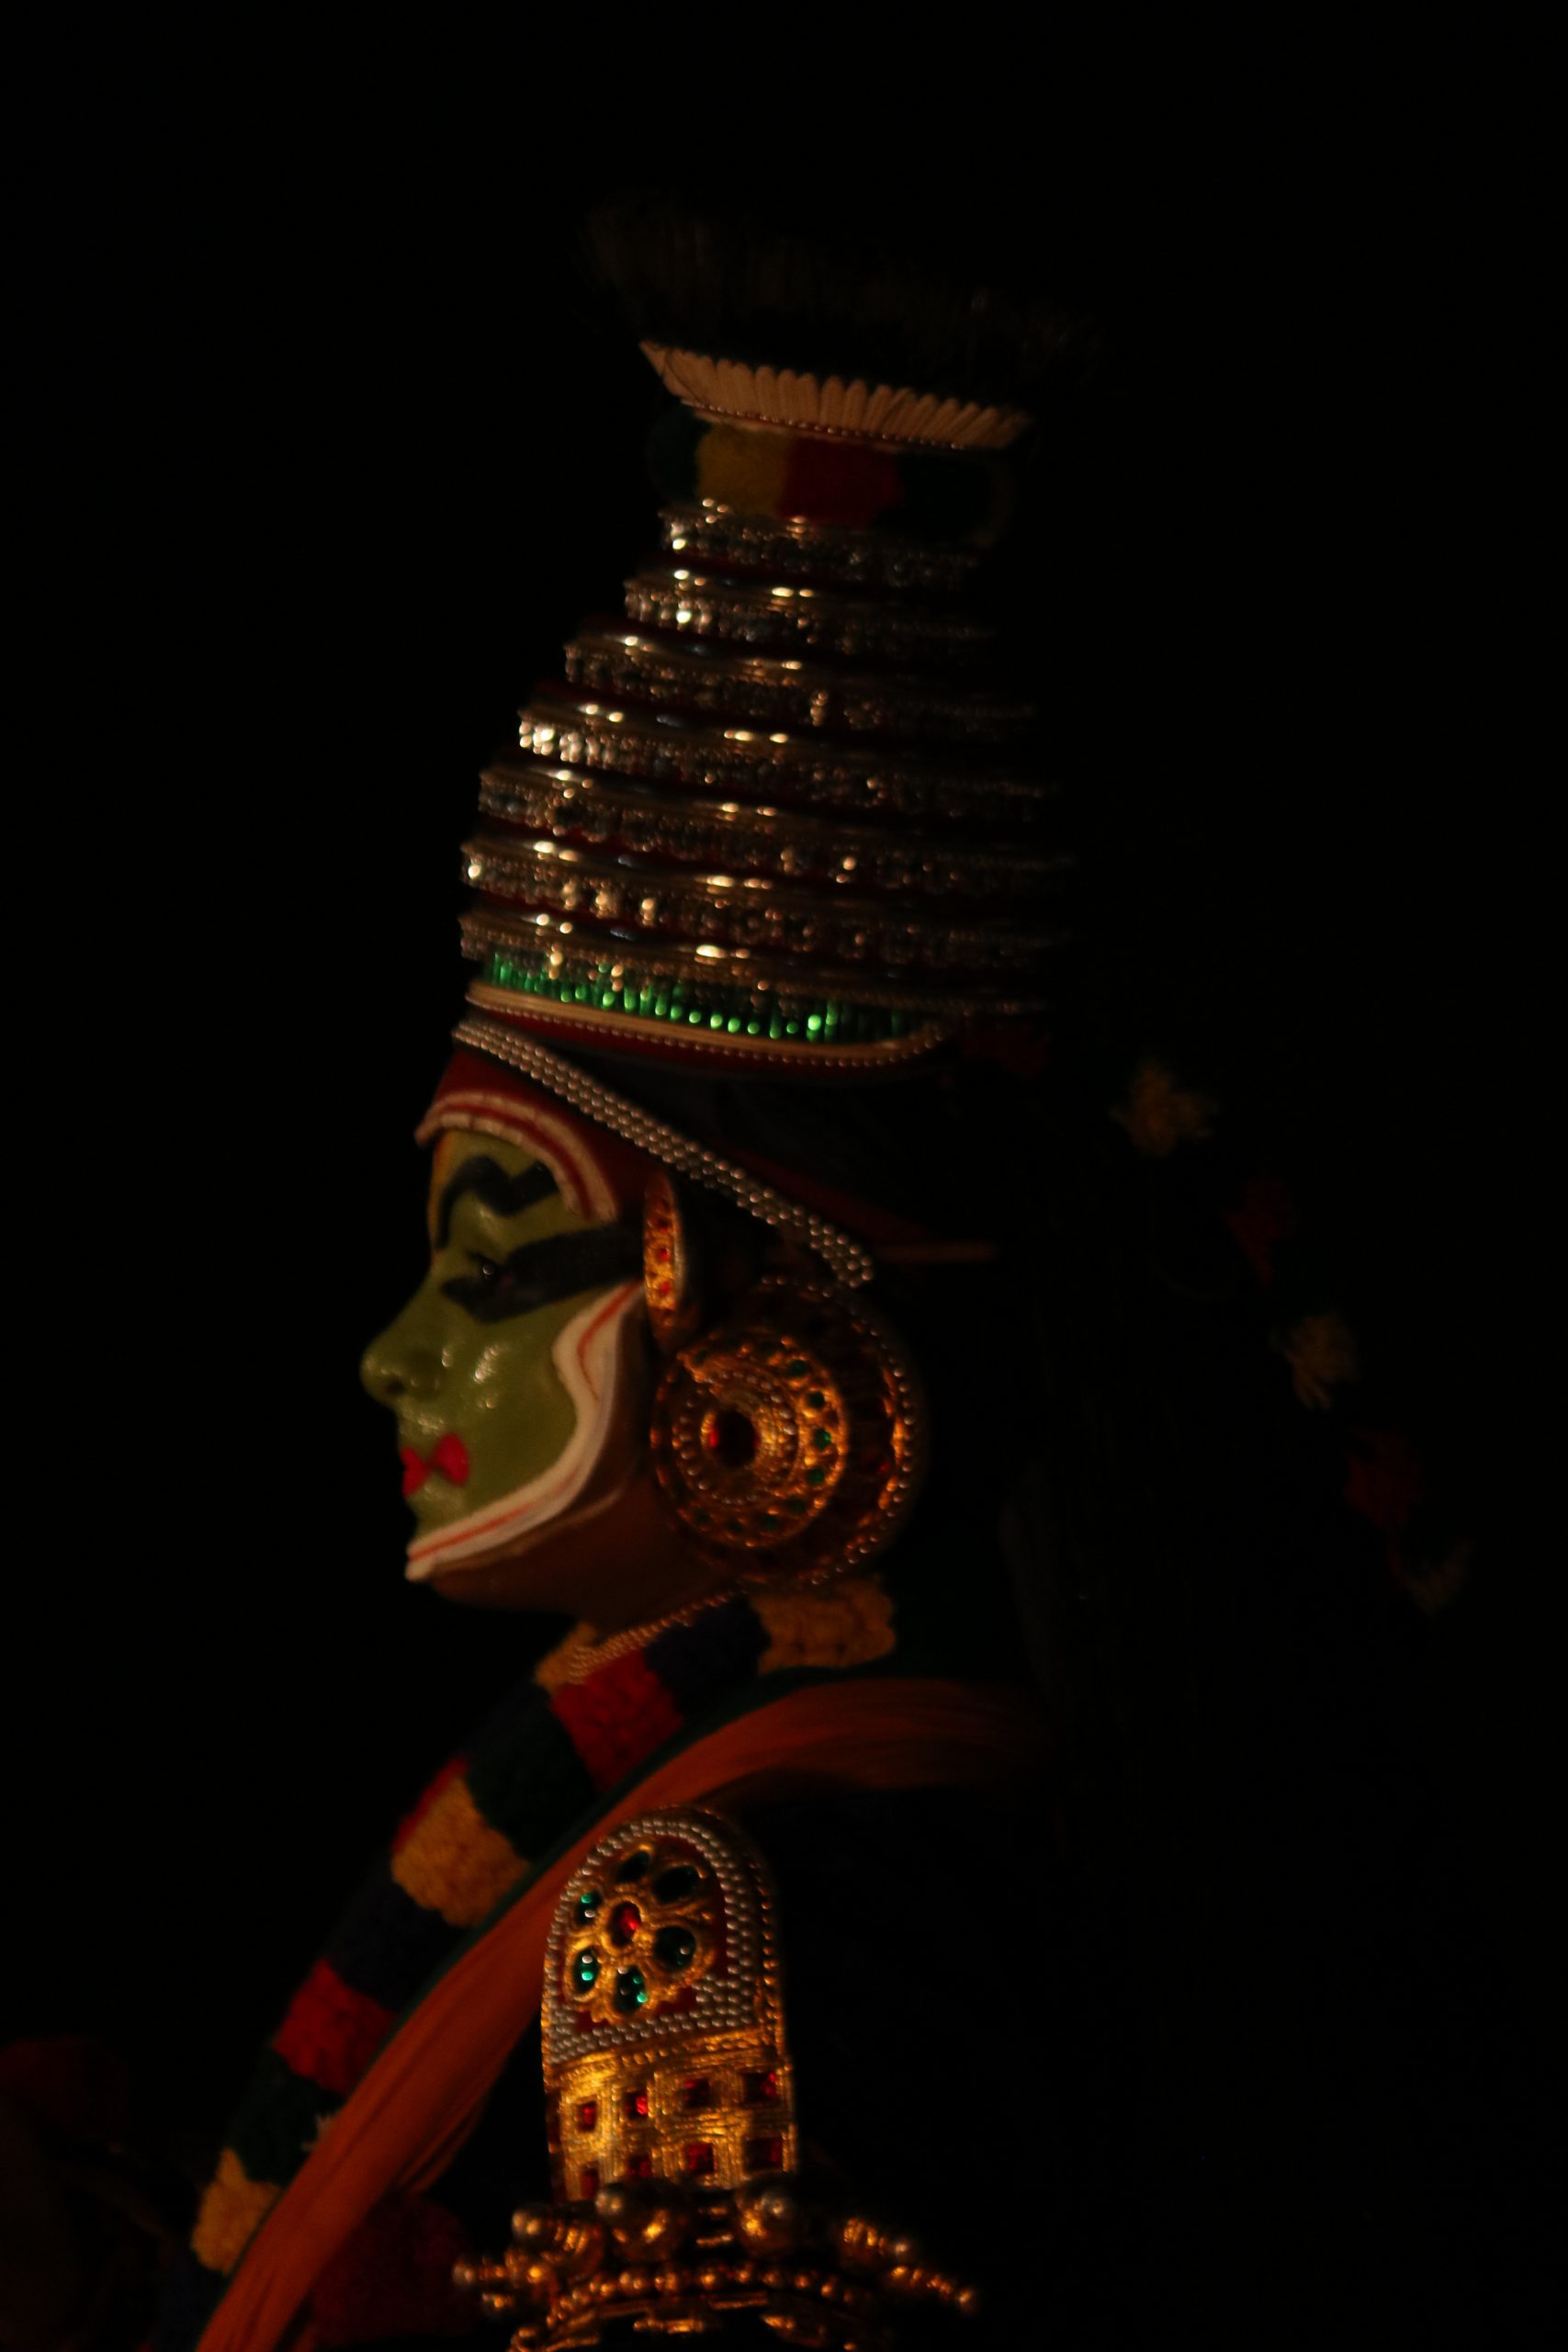 A kathakali dance artist